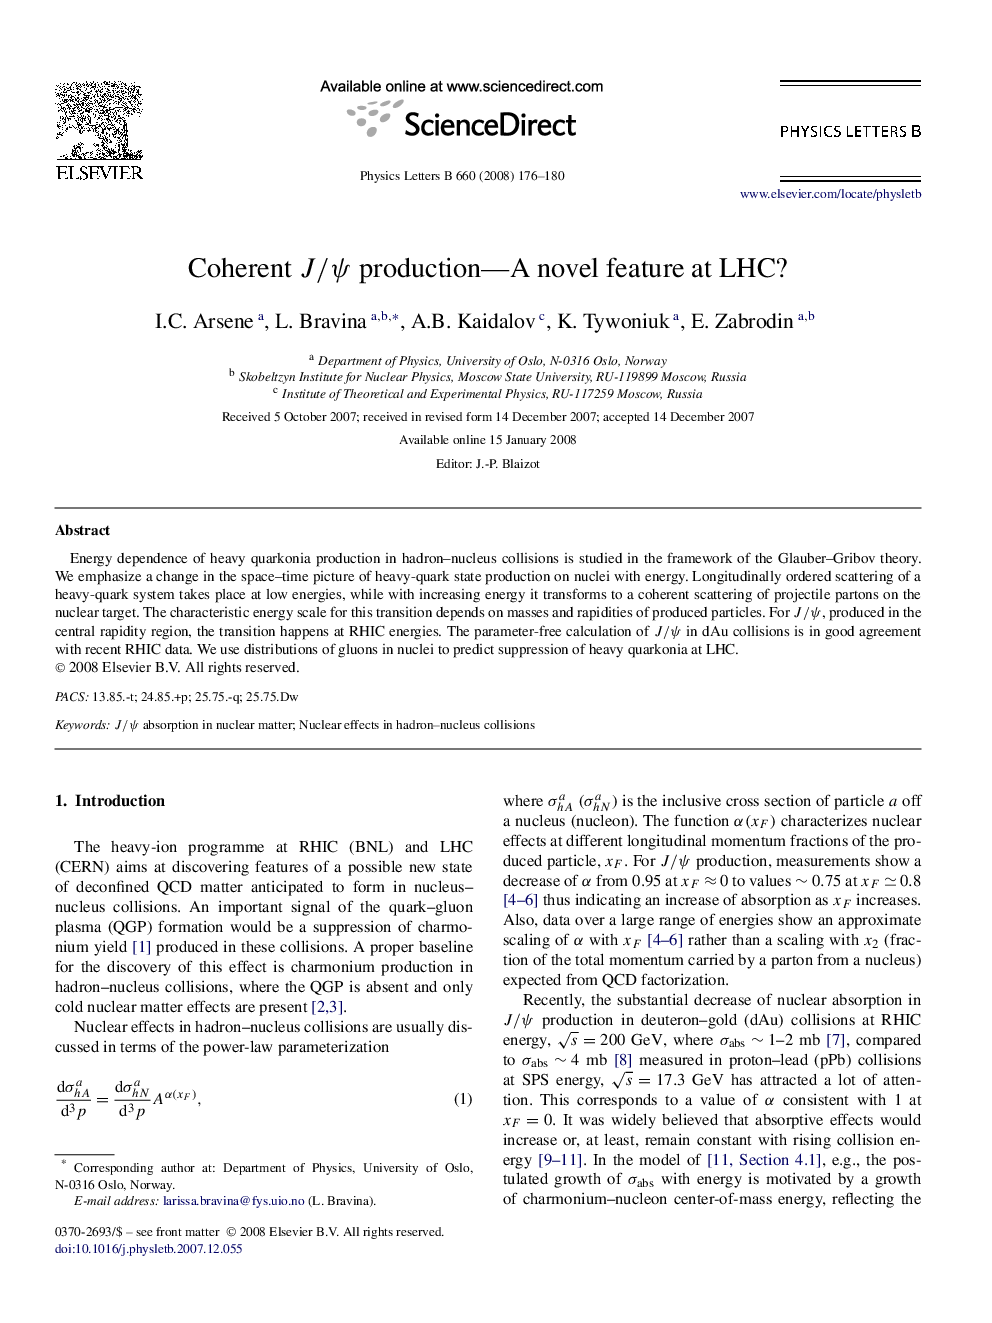 Coherent J/ψJ/ψ production—A novel feature at LHC?